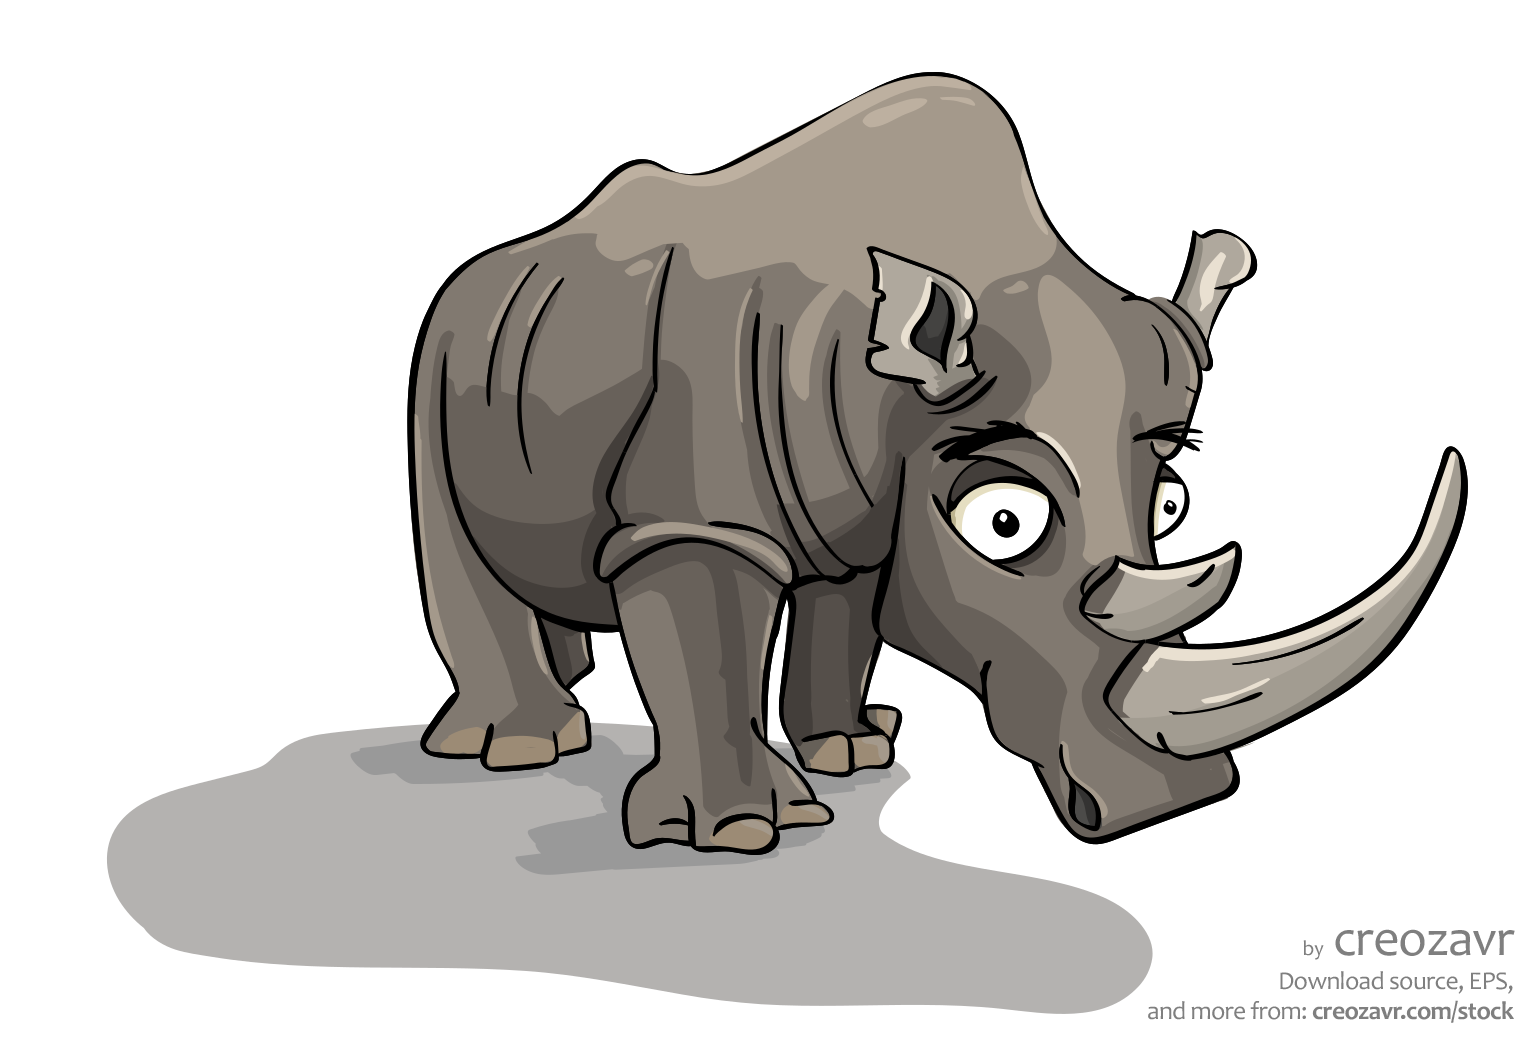 Animated rhino